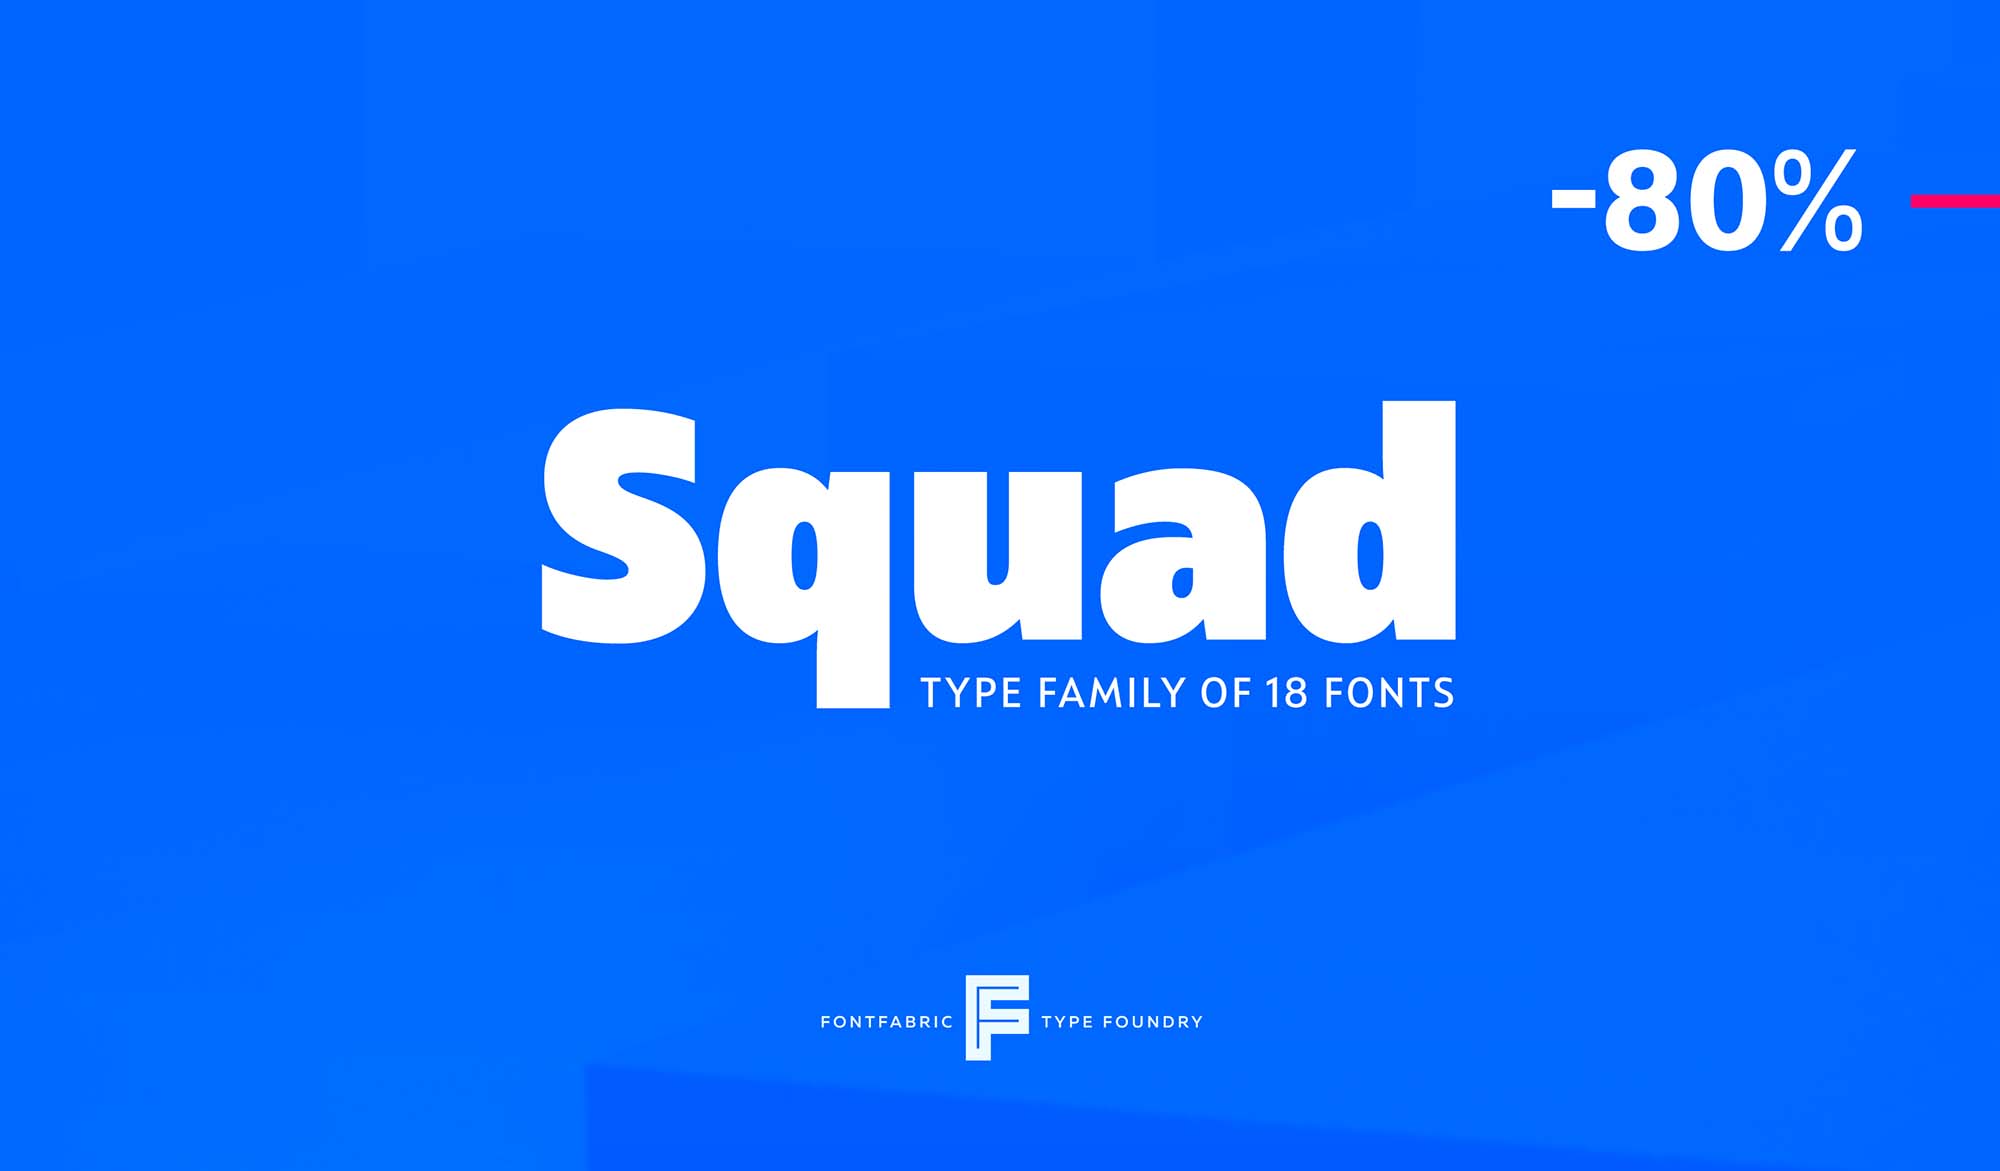 Squad Font Family